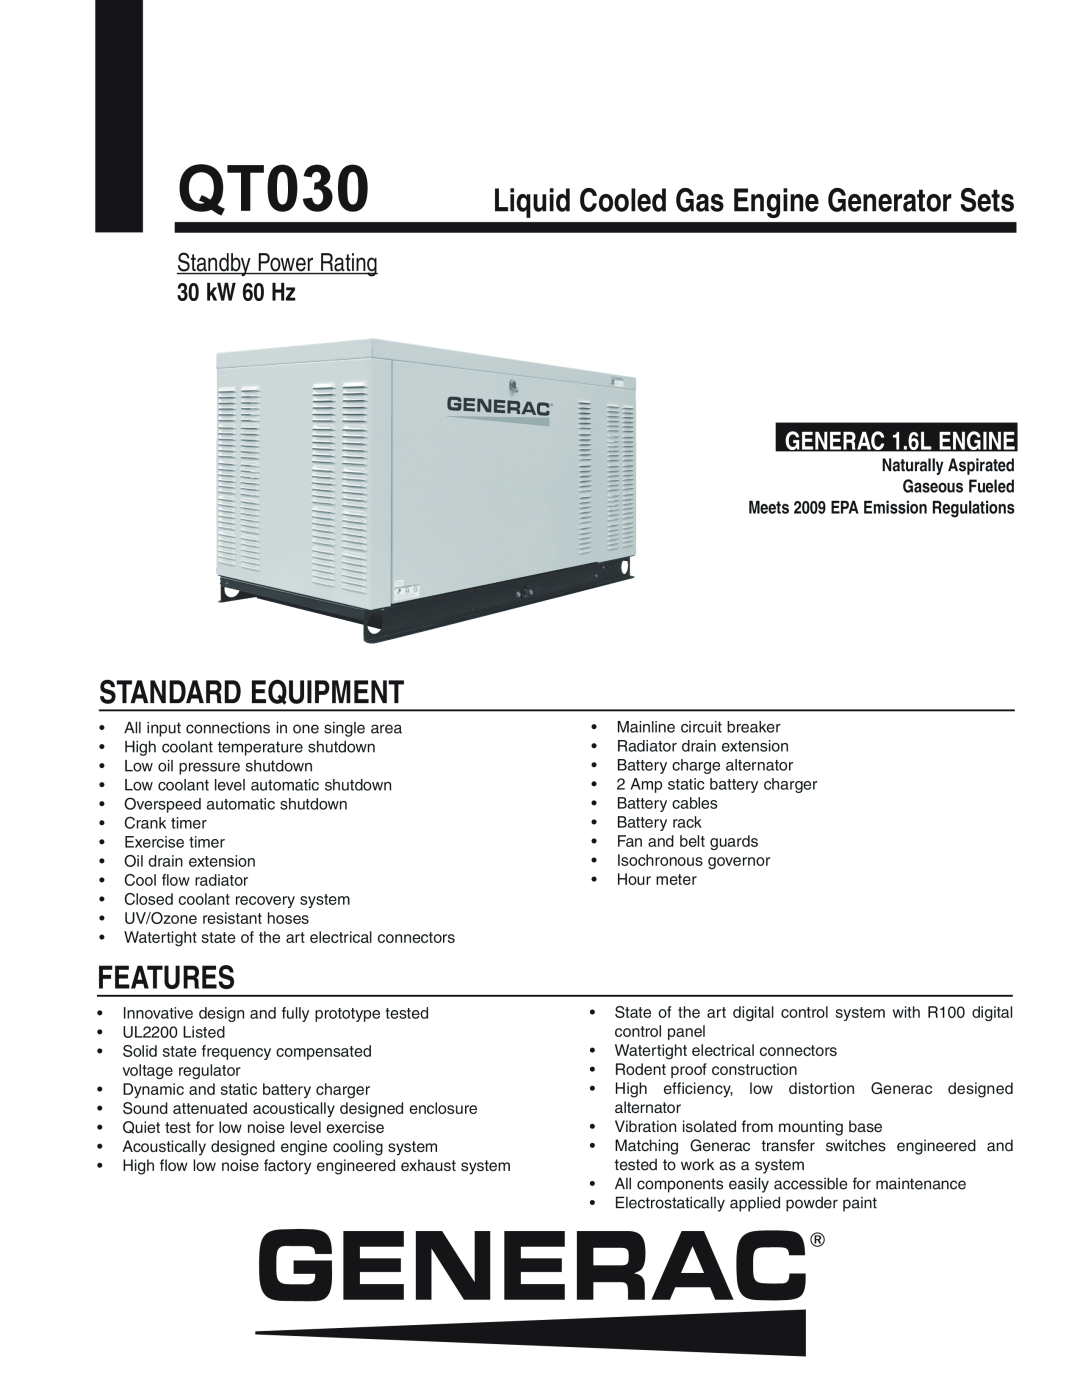 Generac QT03016JNSX manual Liquid Cooled Gas Engine Generator Sets, Standby Power Rating, 30 kW 60 Hz, GENERAC 1.6L ENGINE 